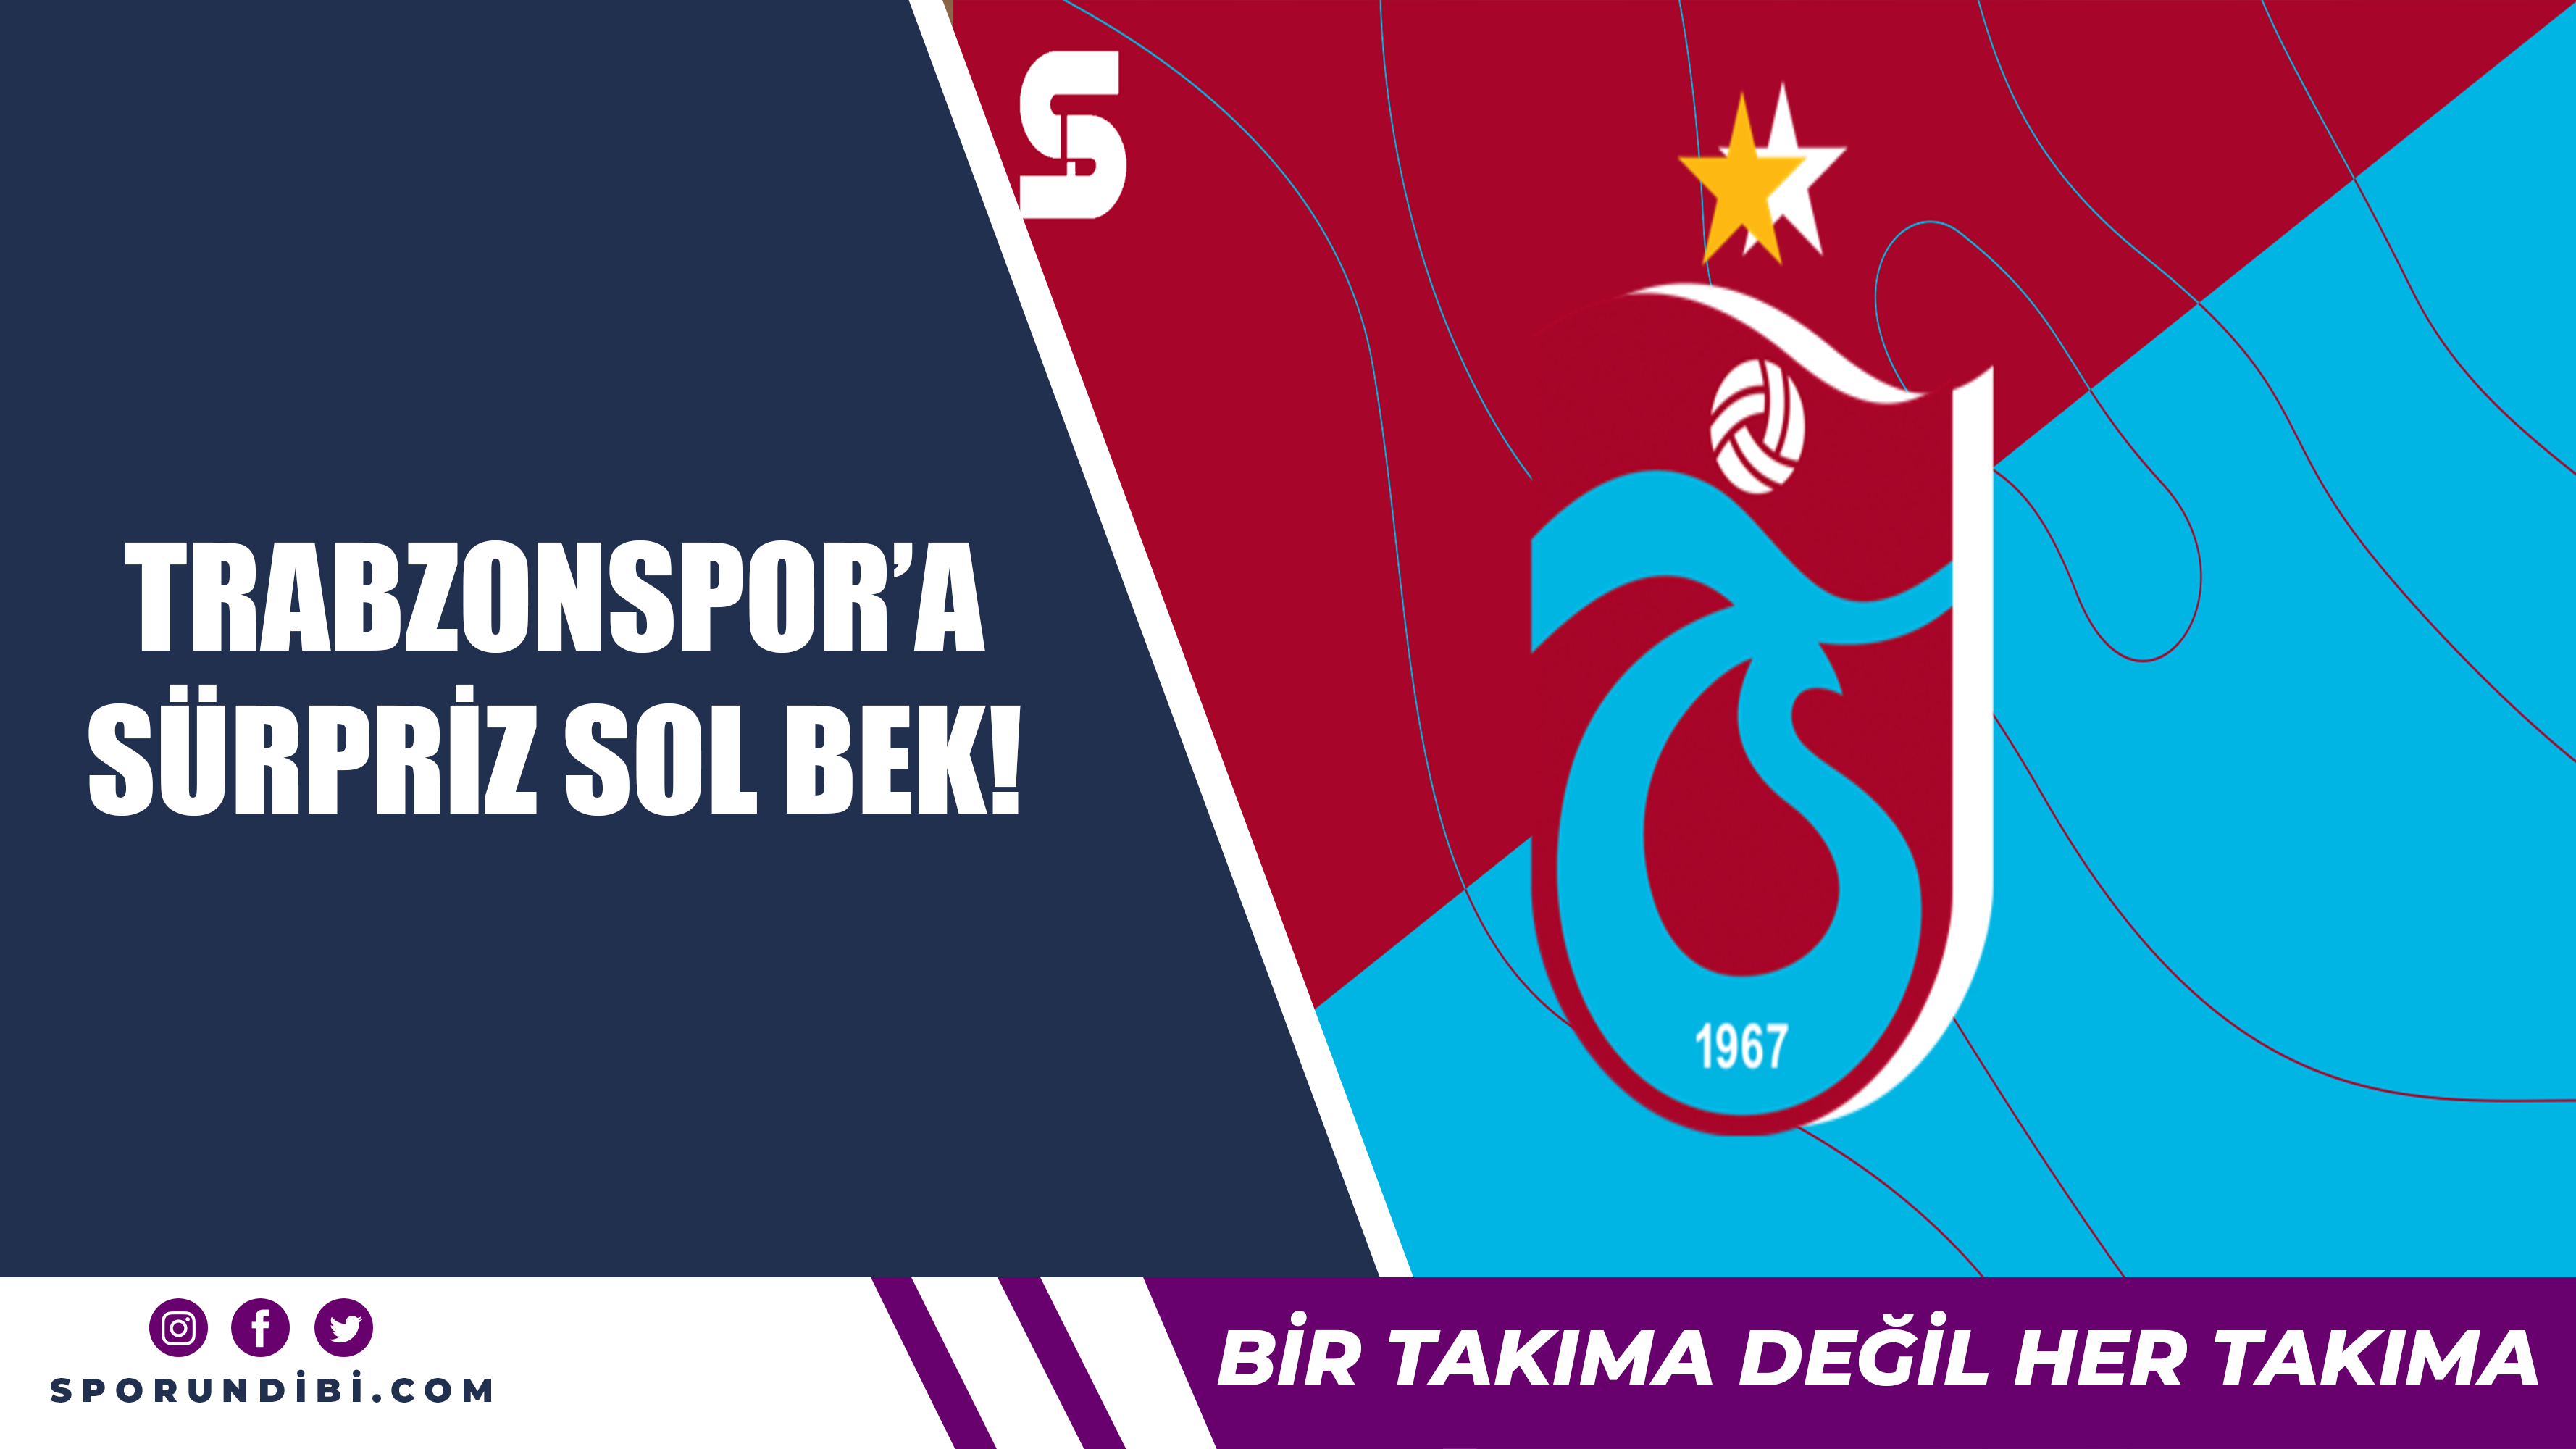 Trabzonspor'a sürpriz sol bek!